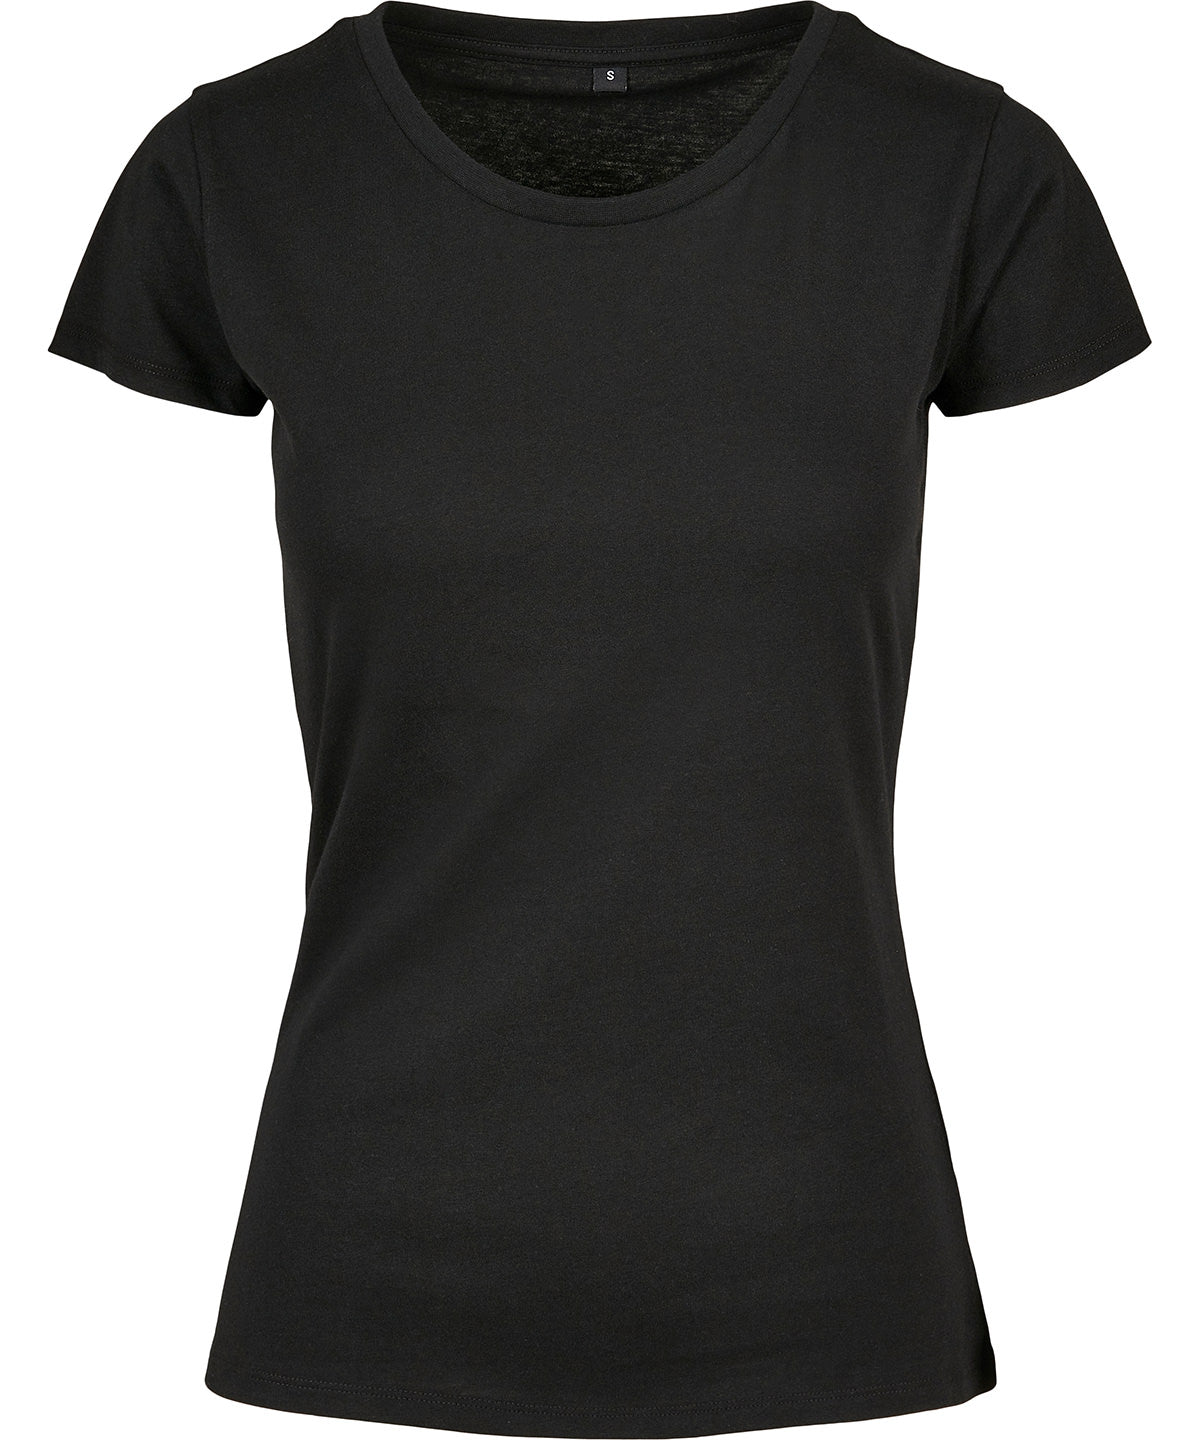 Personalised T-Shirts - Black Build Your Brand Basic Women's basic tee